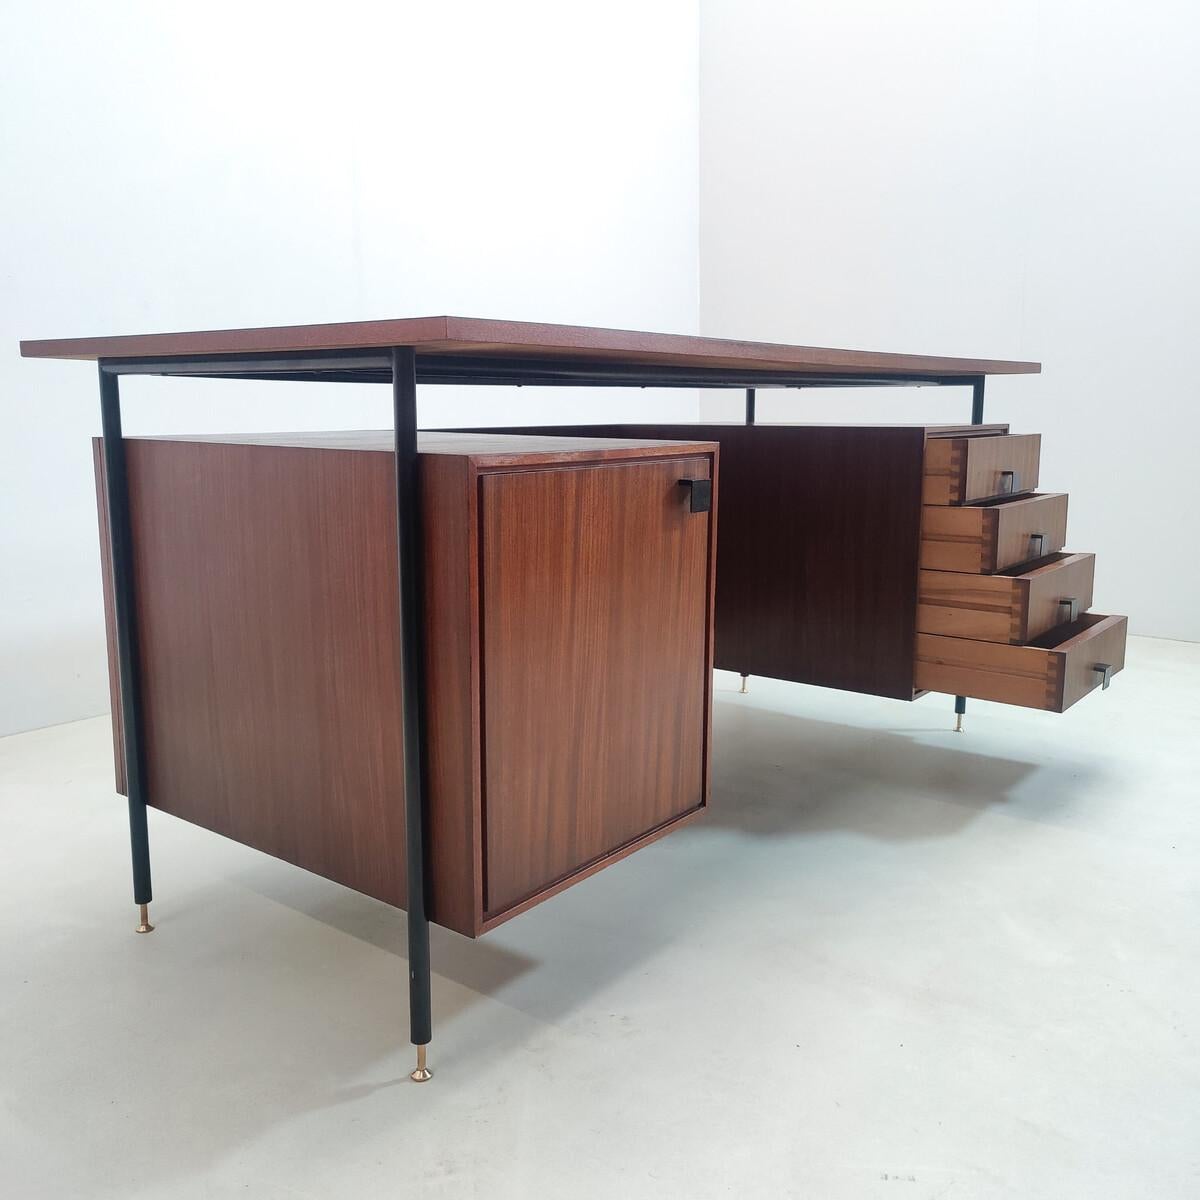 Mid-Century Modern Italian desk with drawers, Wood, 1960s.